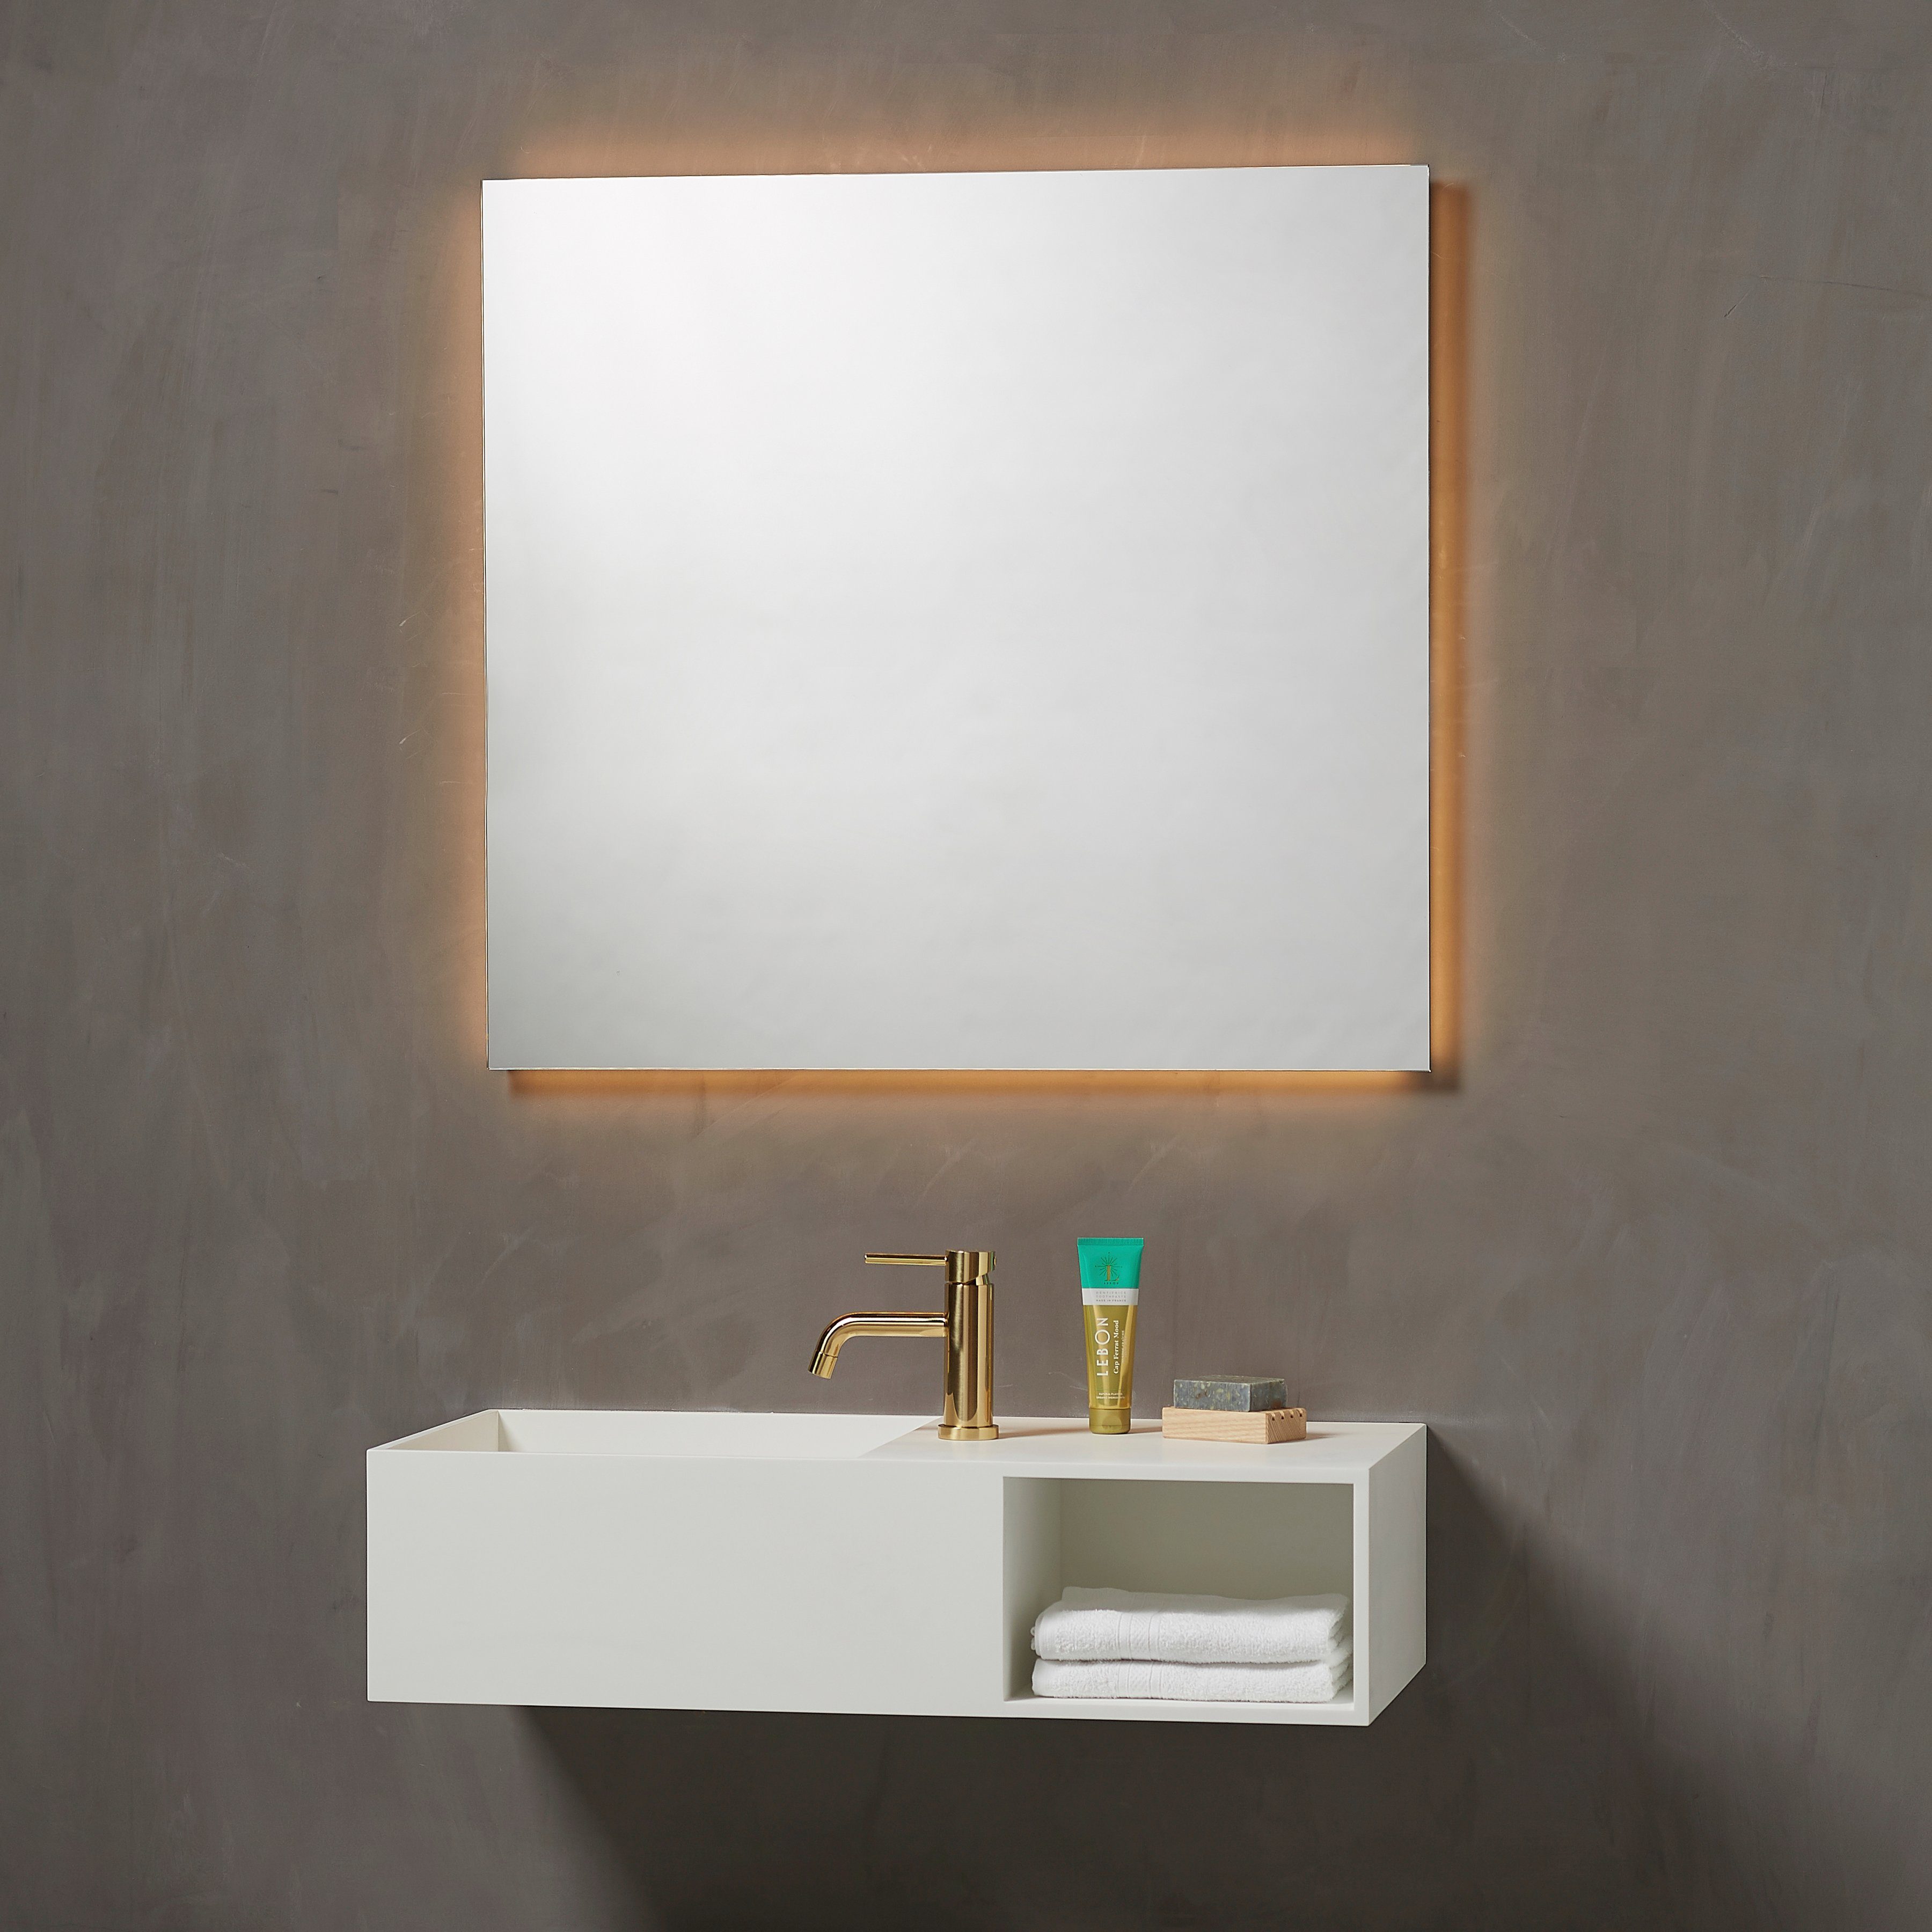 Loevschall Badspiegel Vejle, 75x80 cm, mit Beleuchtung